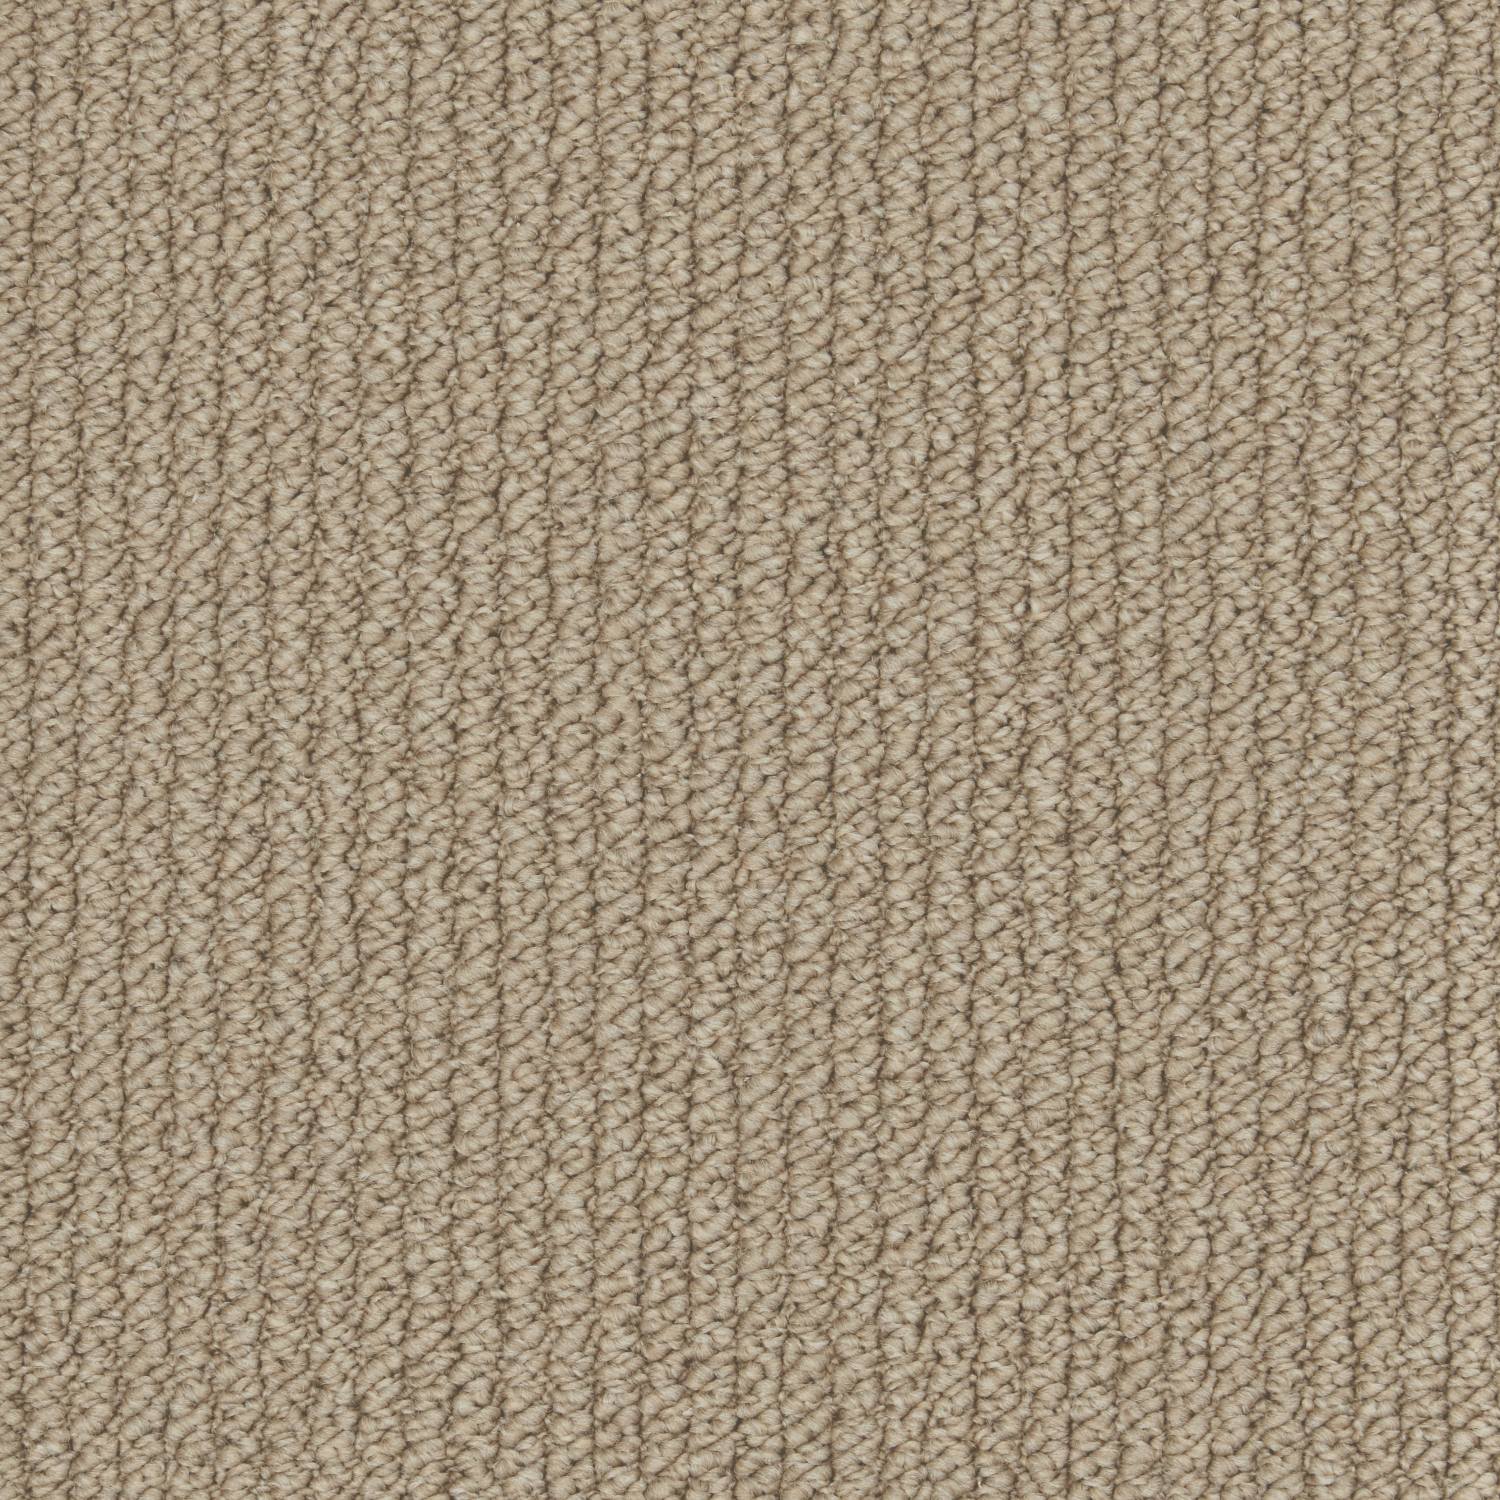 Rural Textures Loop Carpet - Soybean Ribbed